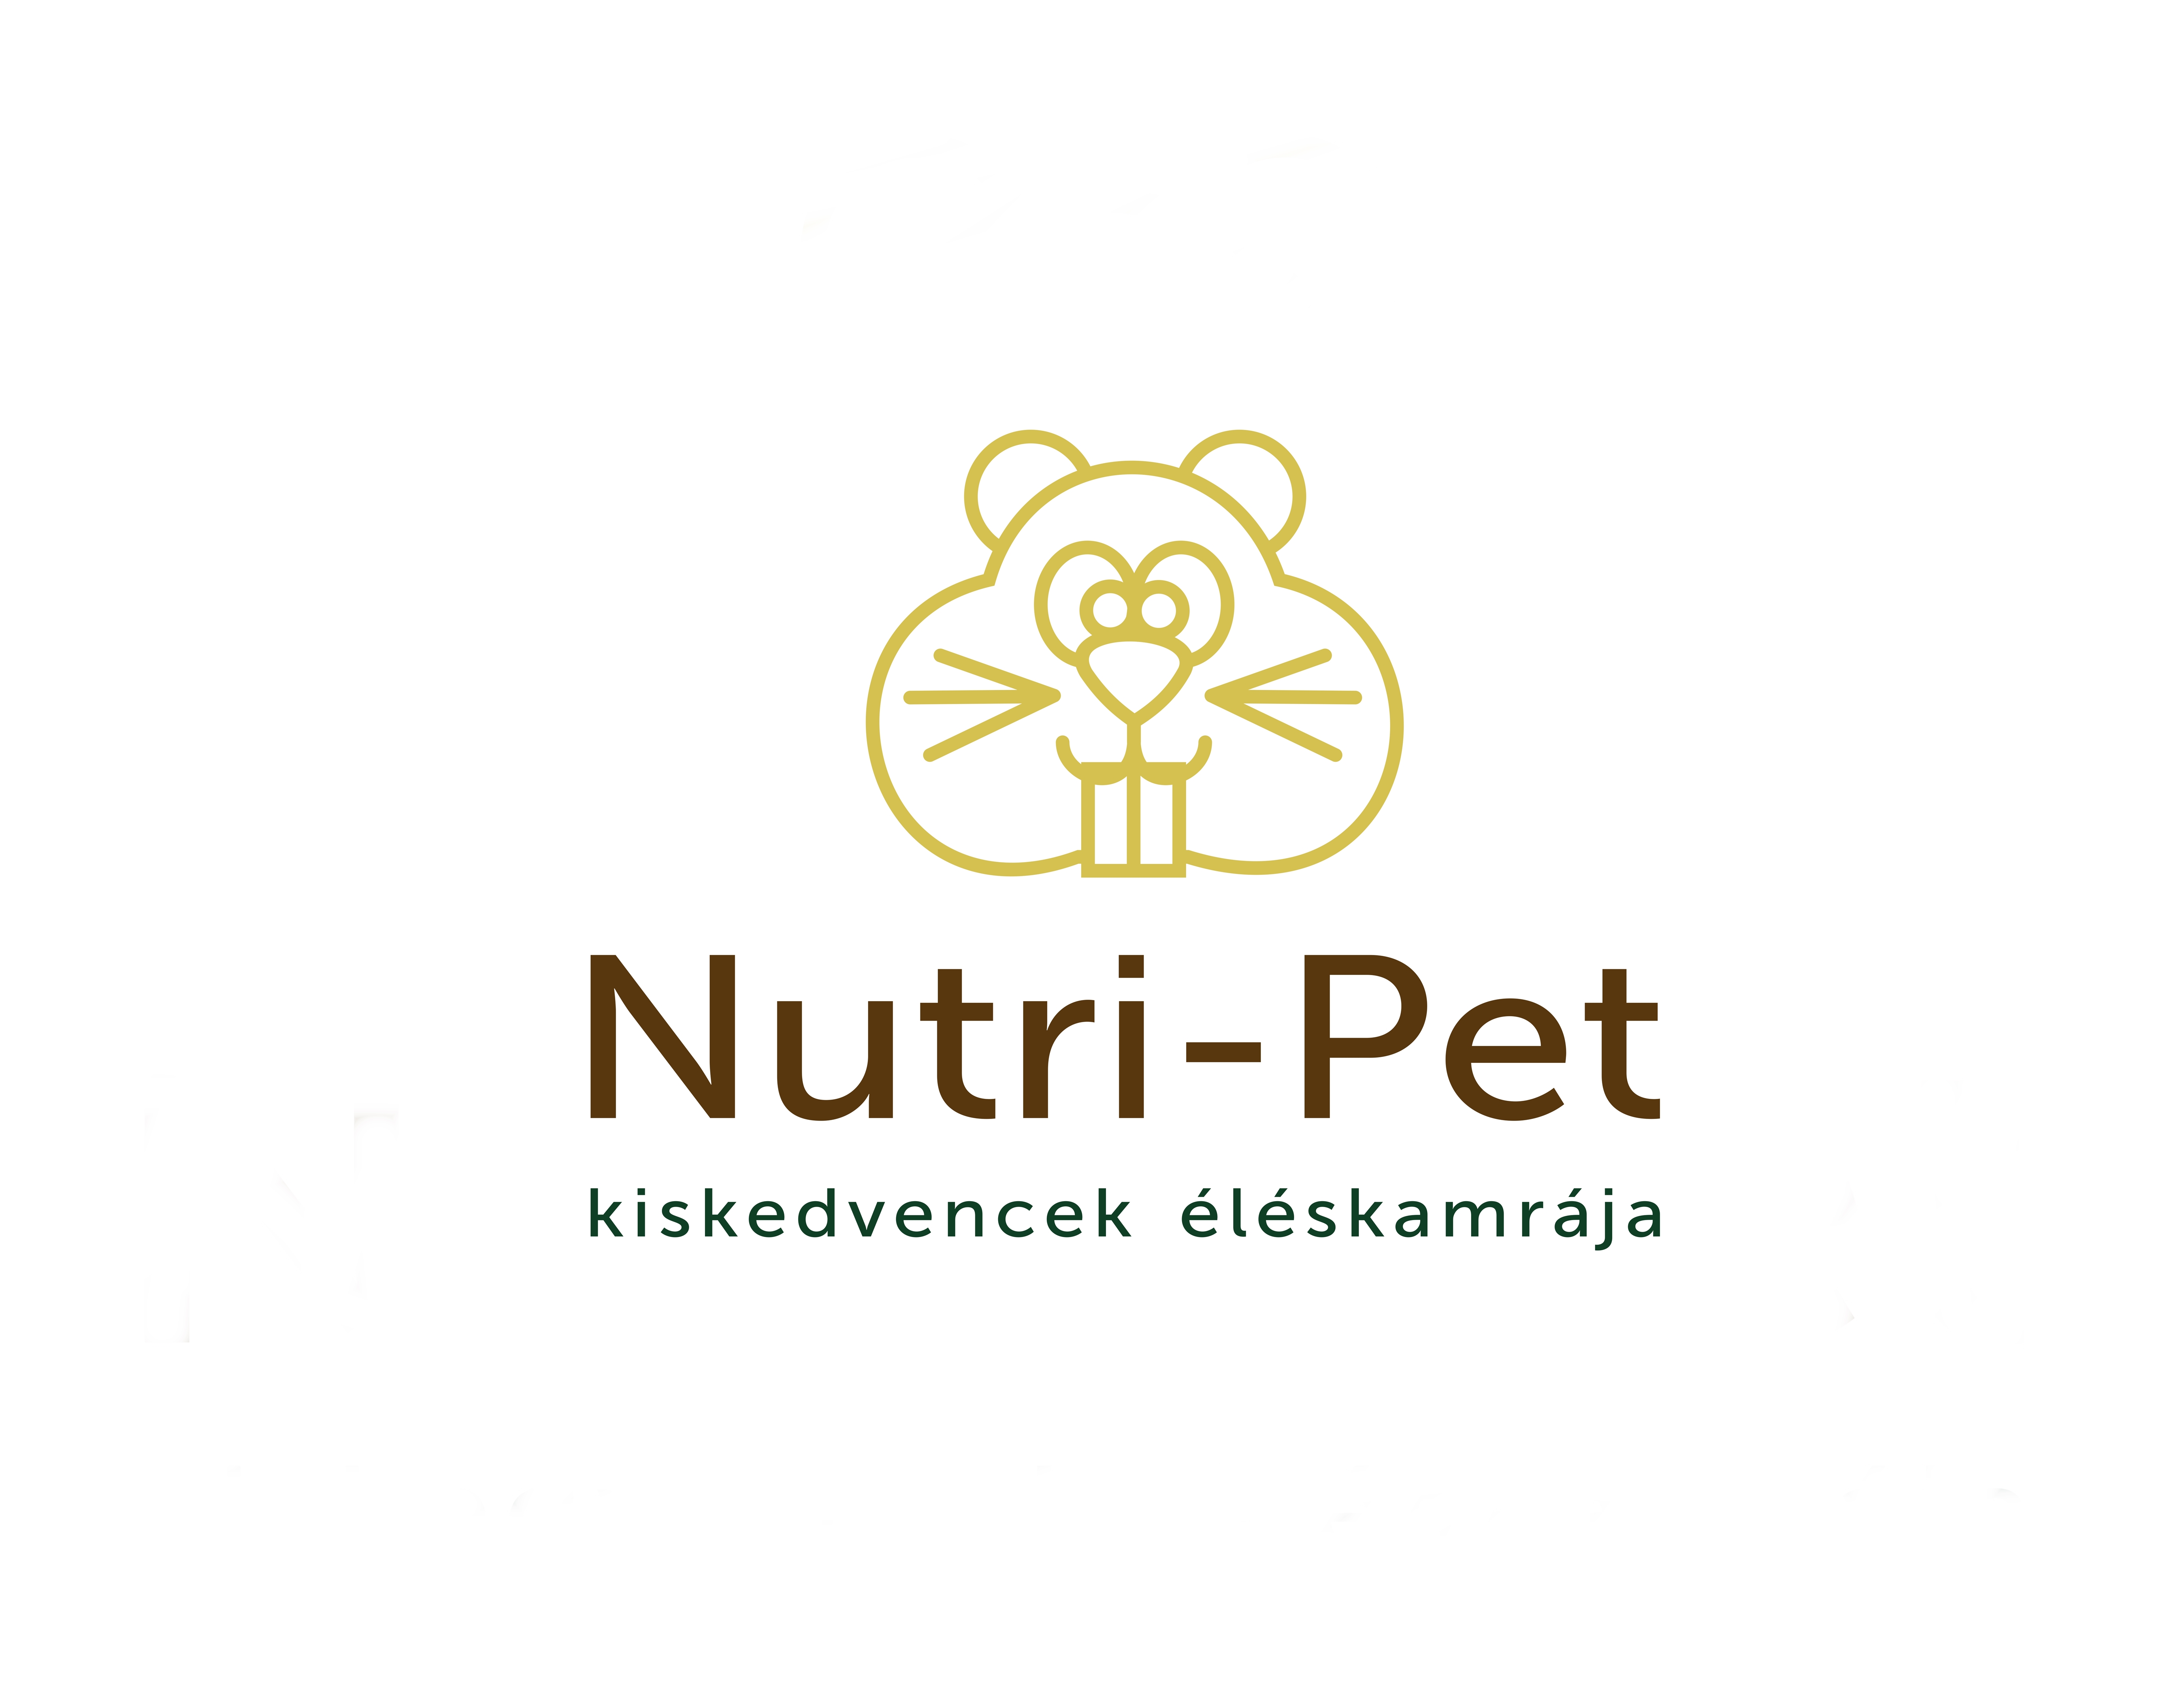 Nutri Pet kis logo